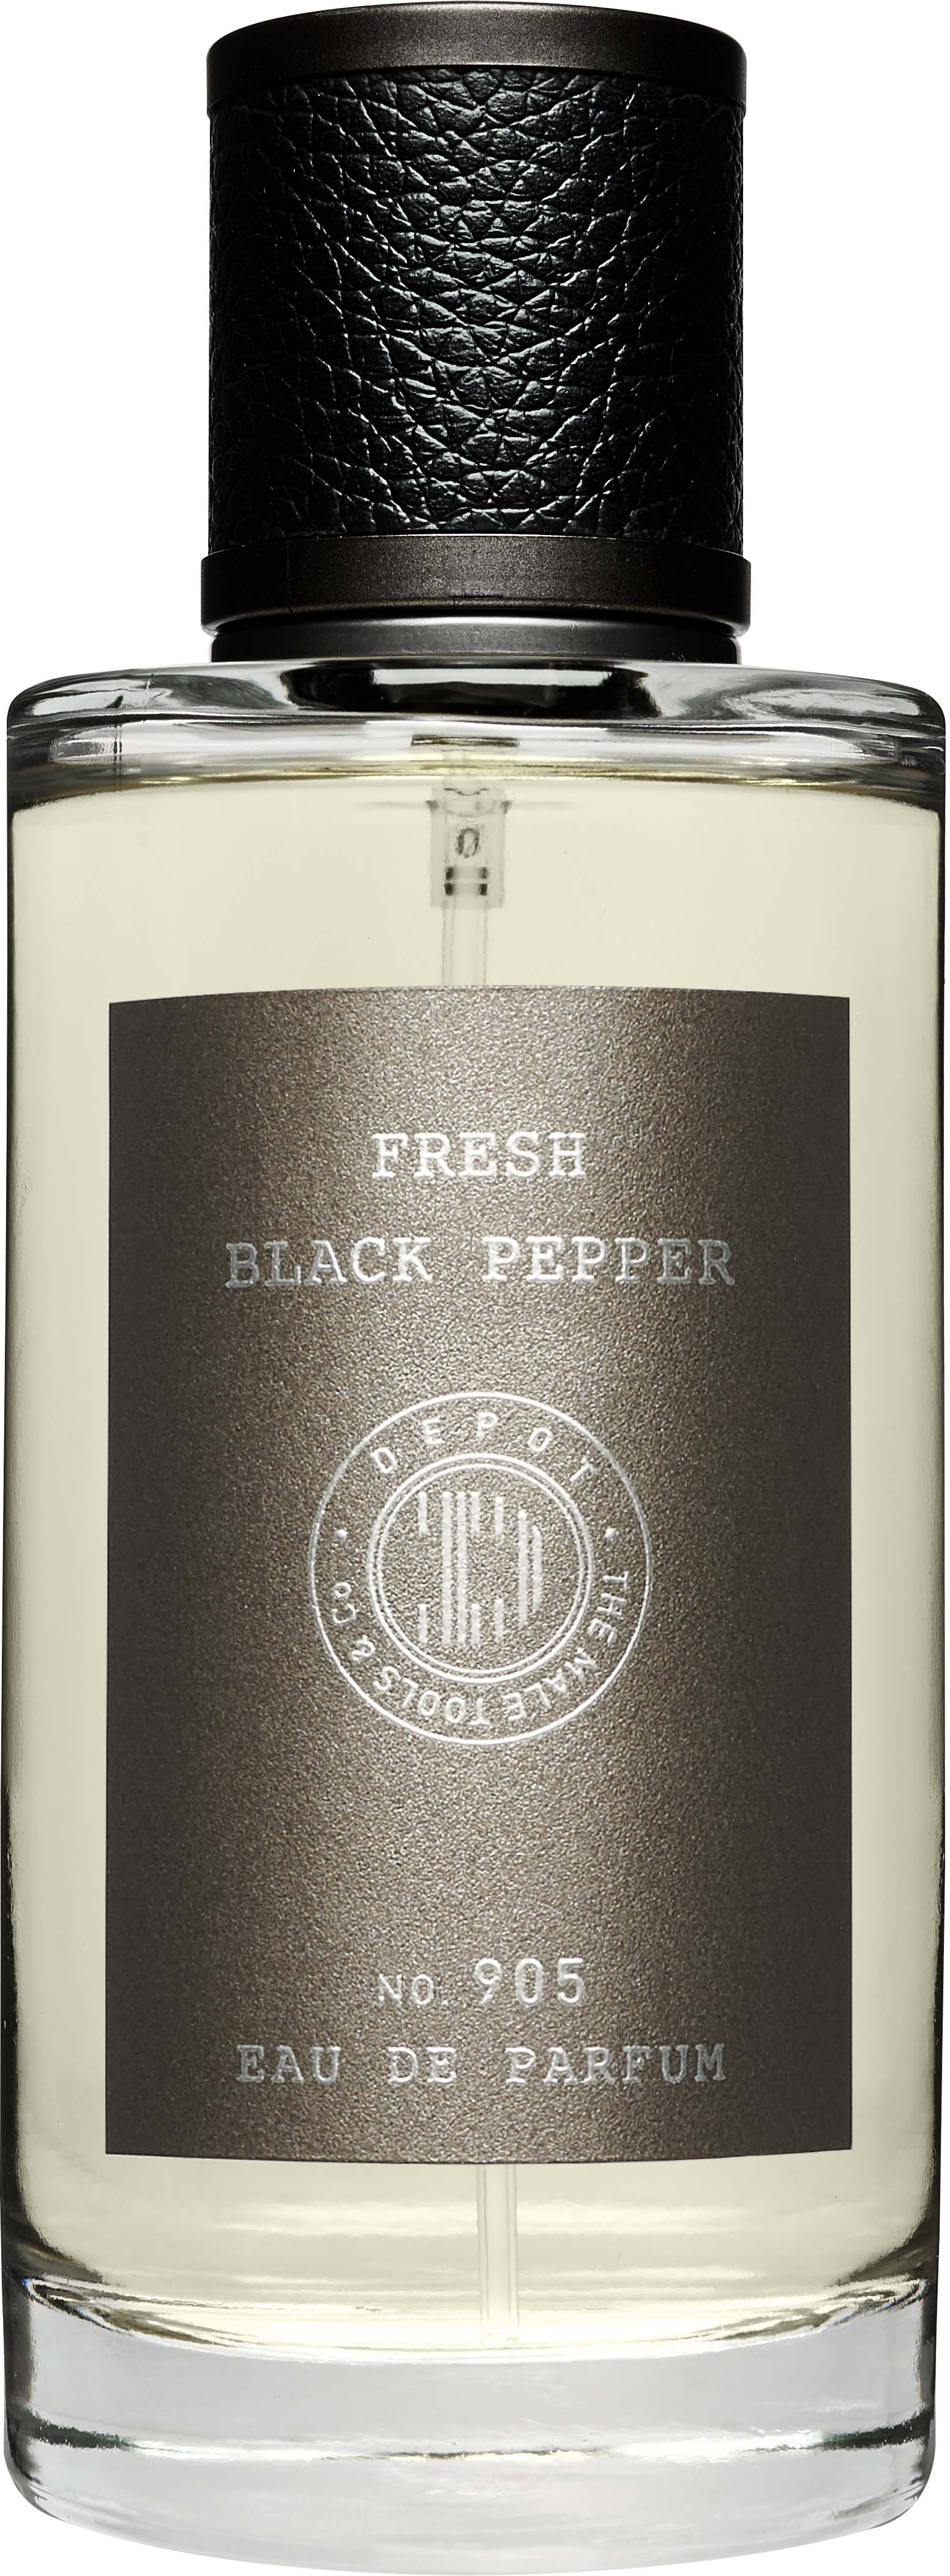 depot no. 905 - fresh black pepper woda perfumowana 100 ml   